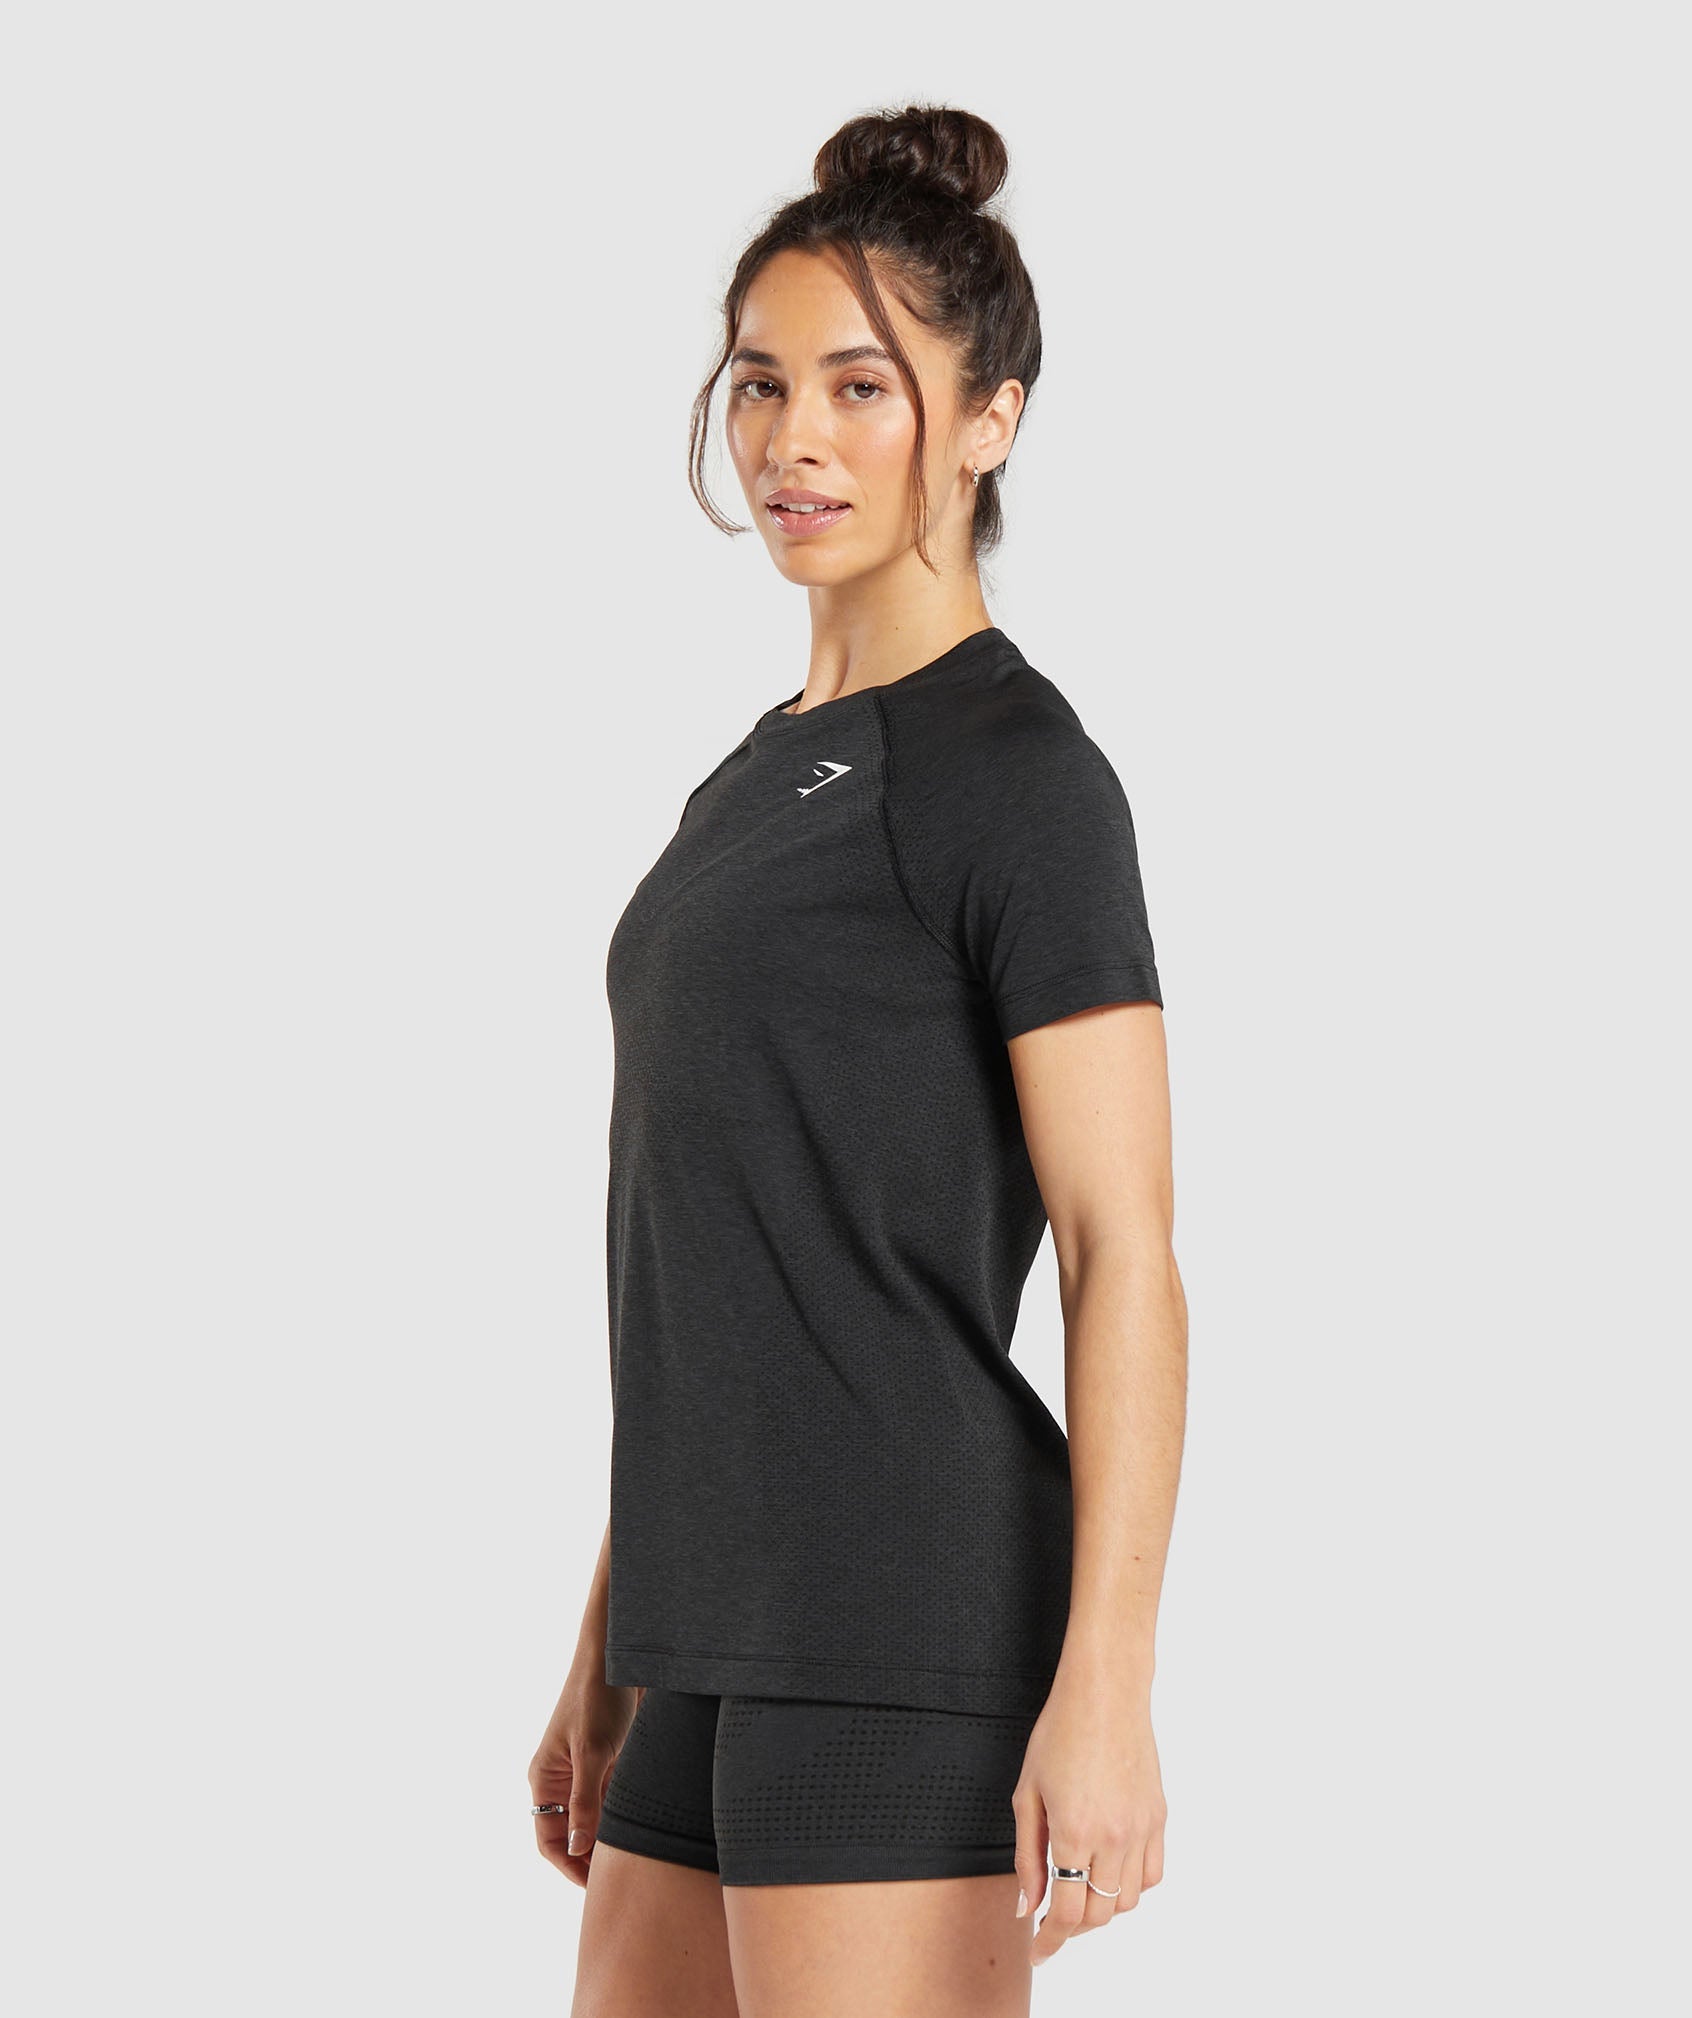 Vital Seamless 2.0 Light T-Shirt in Black Marl - view 3